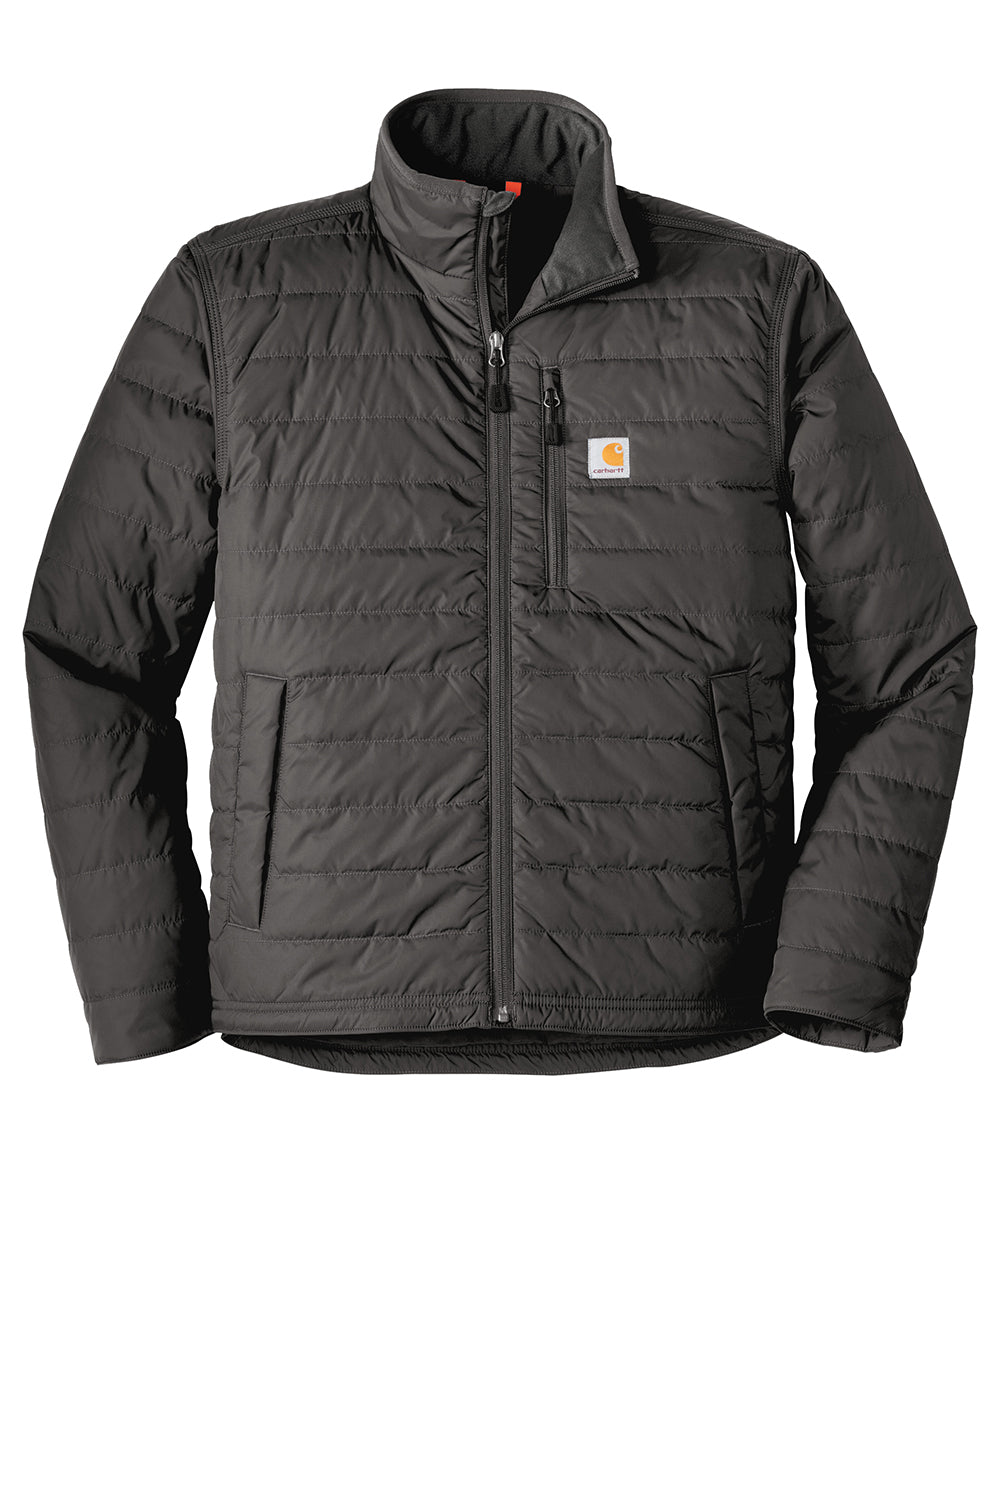 Carhartt CT102208 Mens Gilliam Wind & Water Resistant Full Zip Jacket Shadow Grey Flat Front